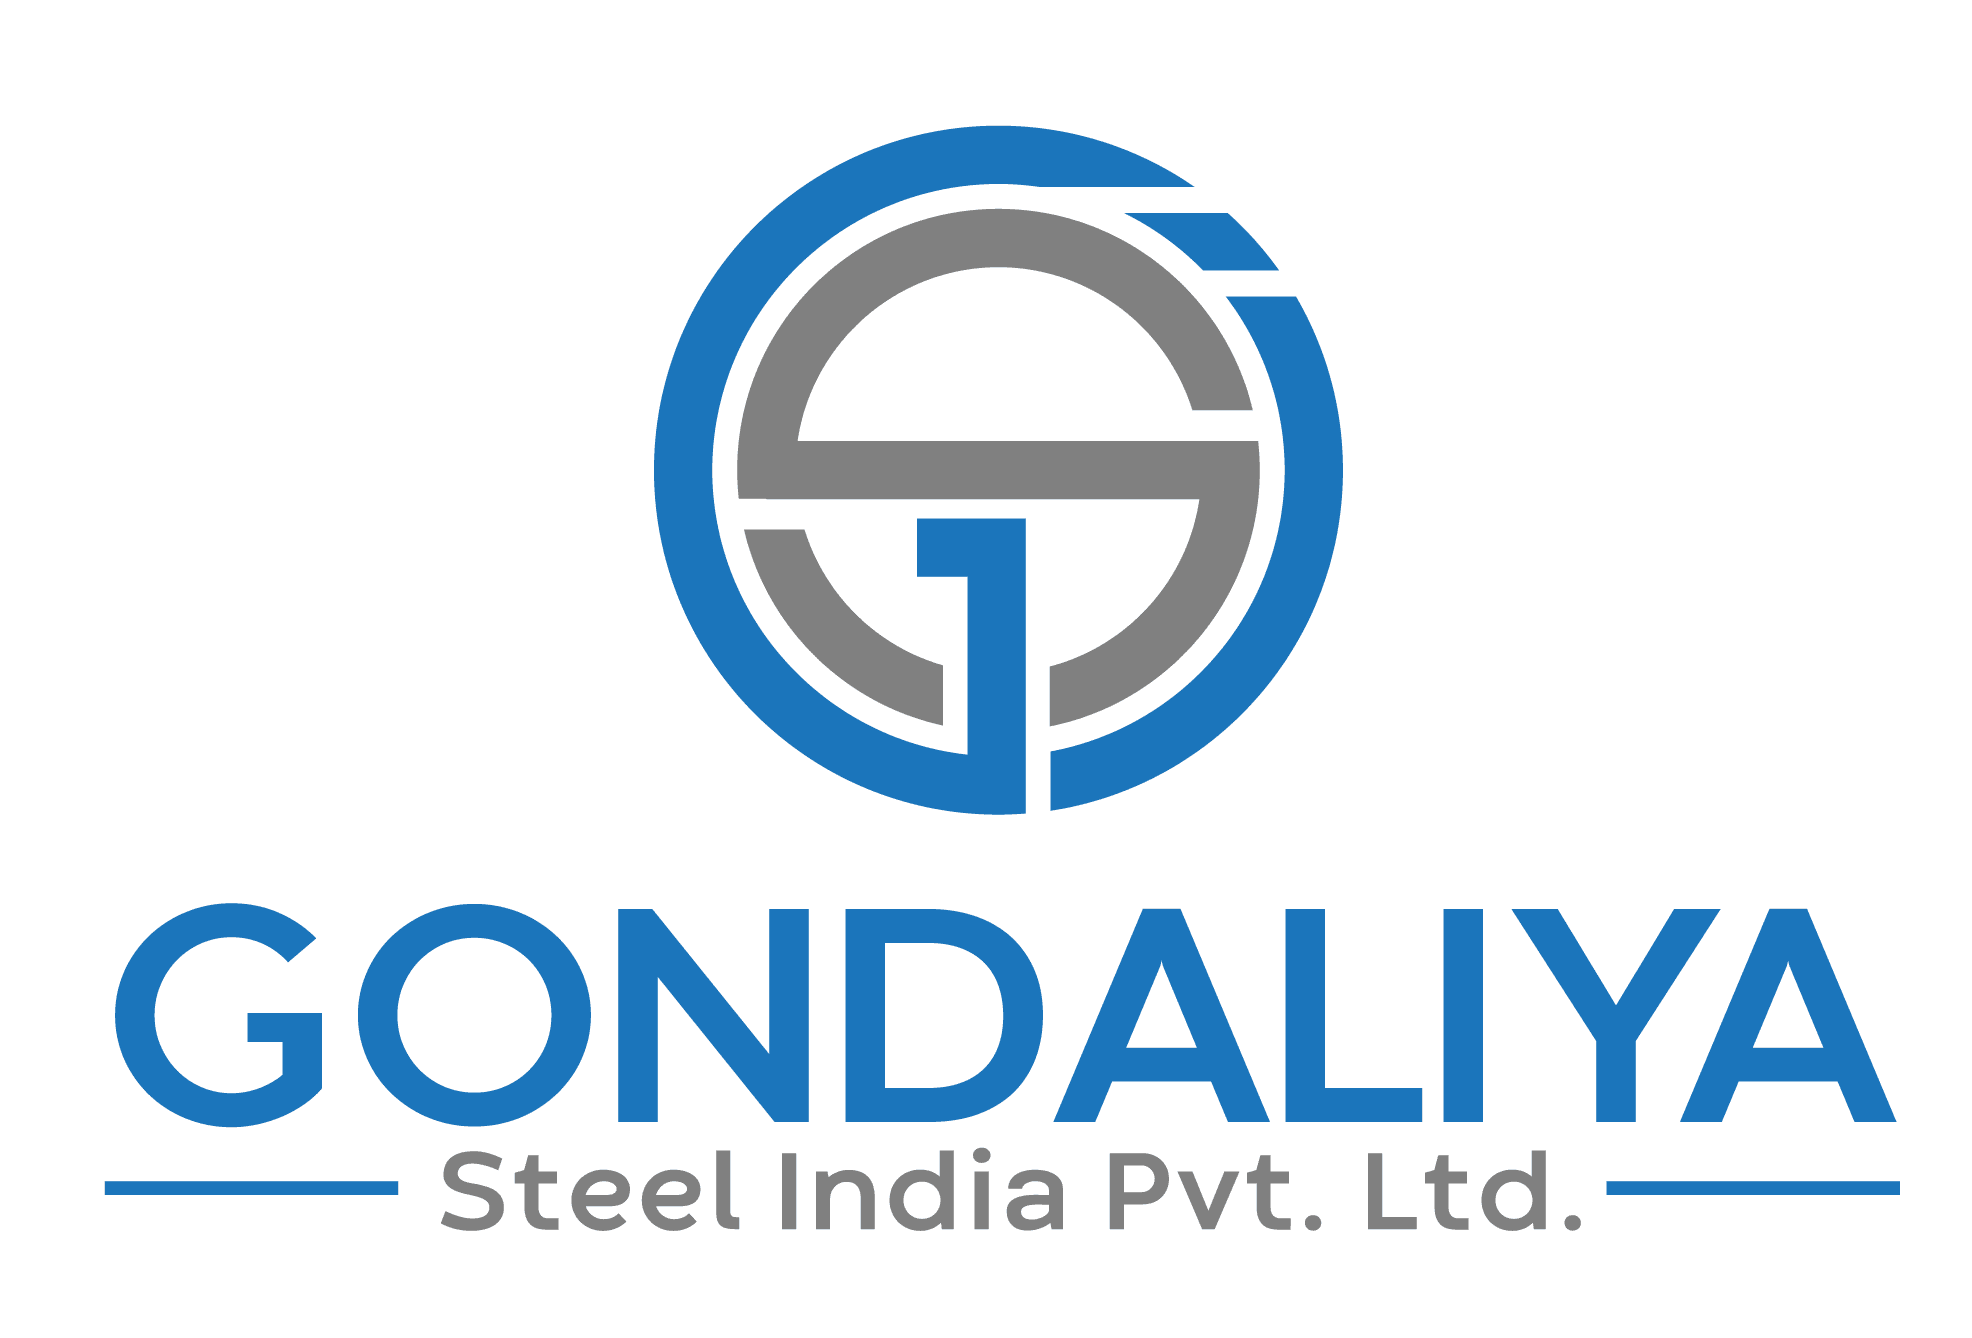 Gondaliya Steel India Pvt. Ltd.